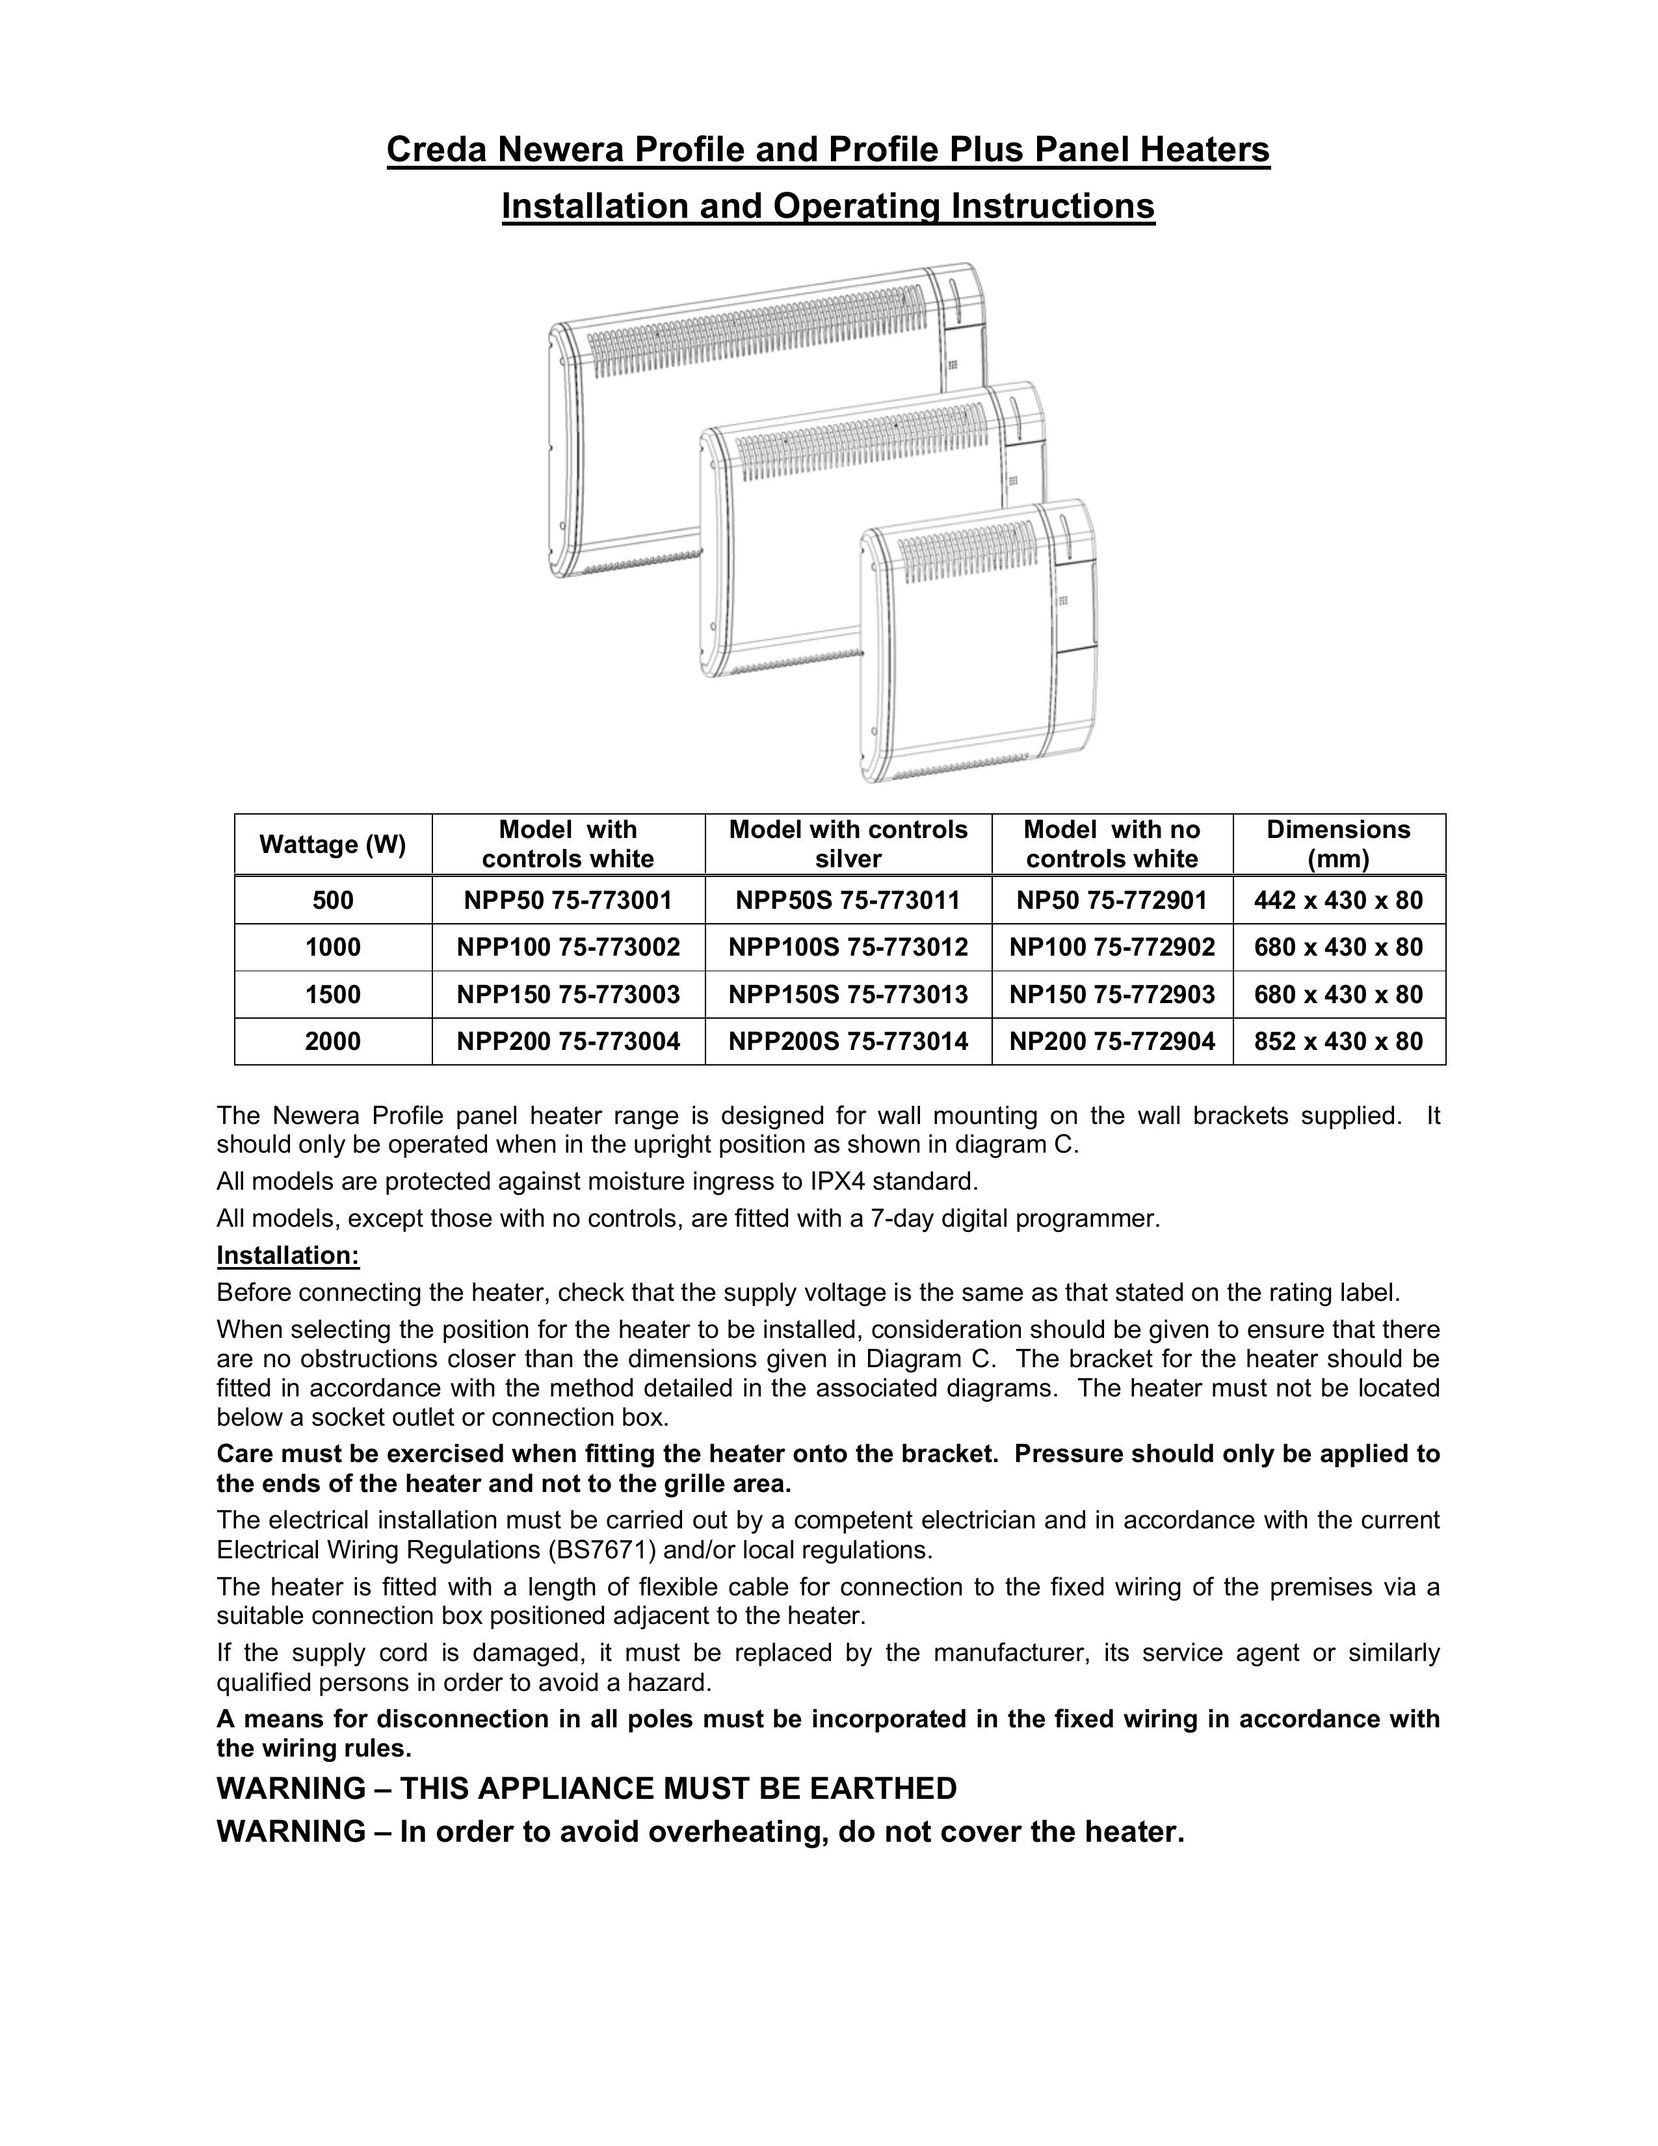 Creda NP150 75-772903 Air Conditioner User Manual